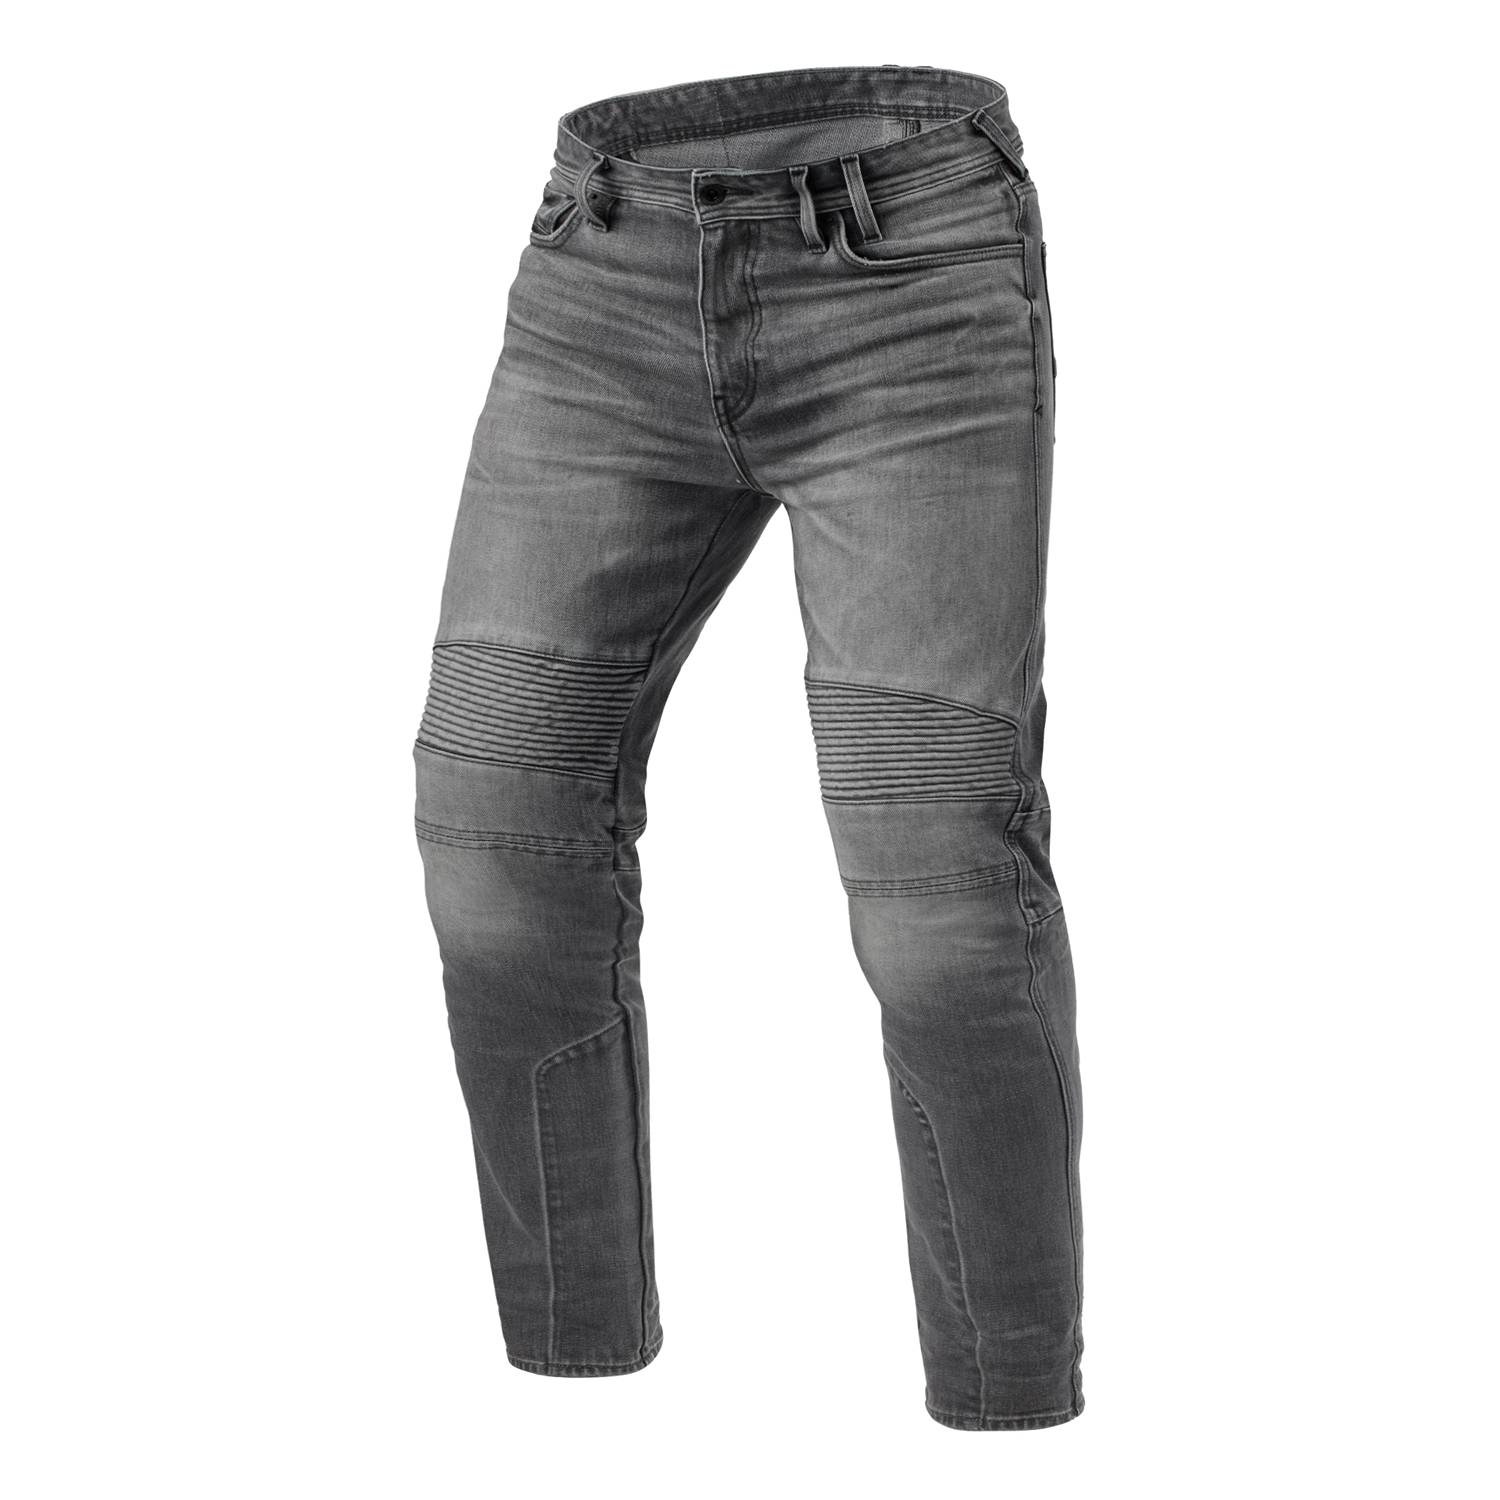 Image of REV'IT! Jeans Moto 2 TF Medium Grey Used L36 Motorcycle Jeans Größe L36/W36